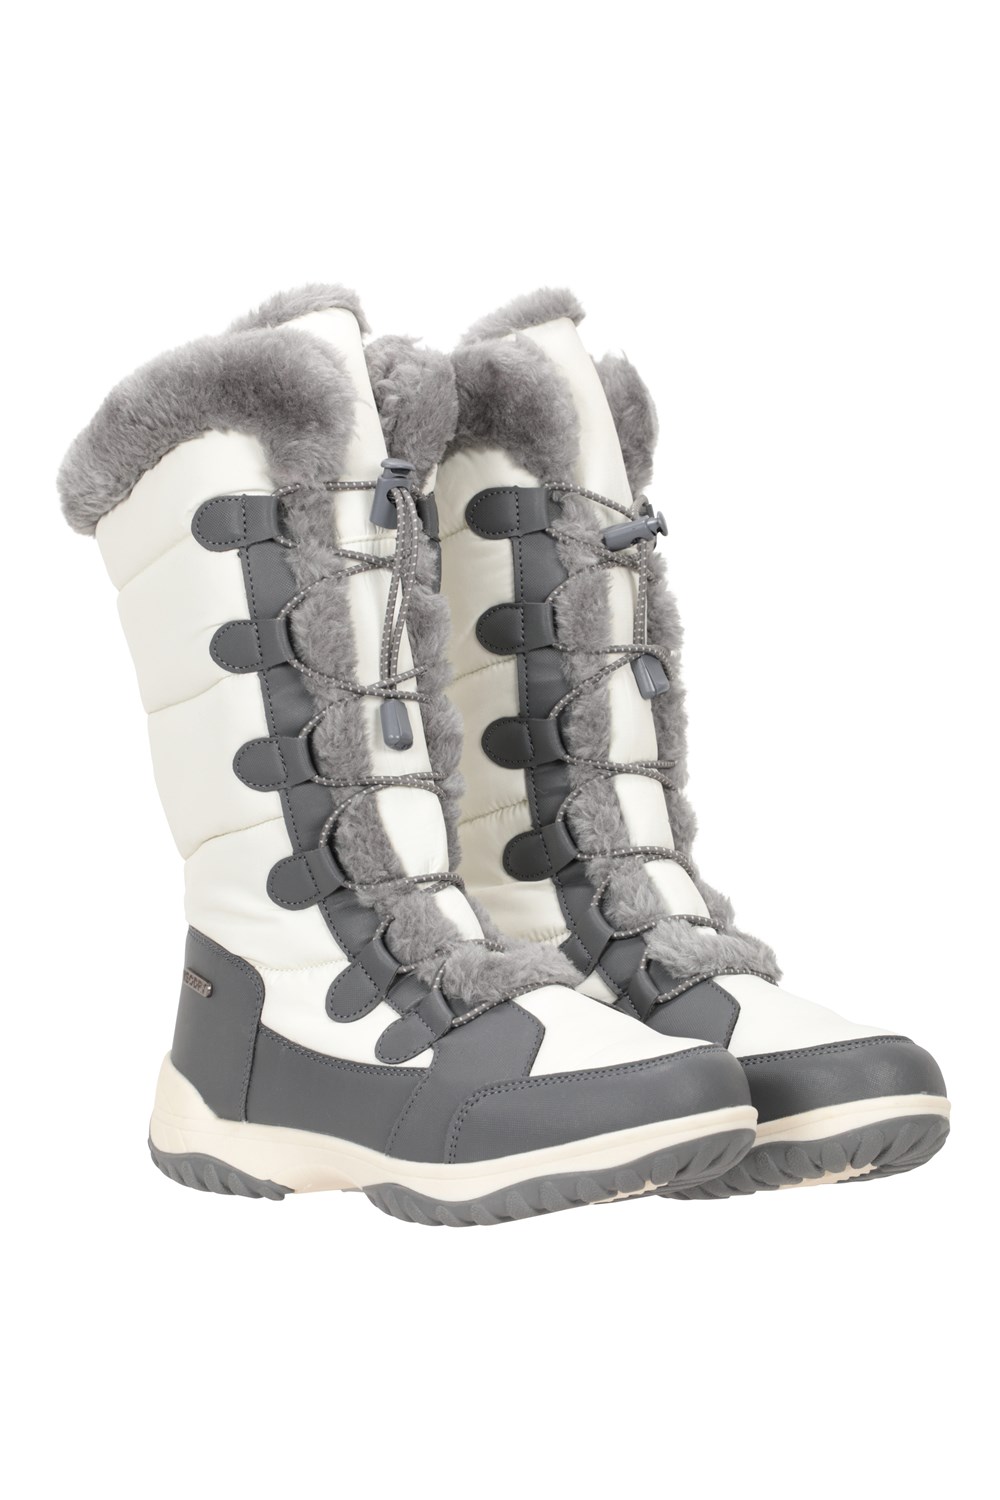 Mountain Warehouse Snowflake Women's Snow Boots Waterproof Winter ...